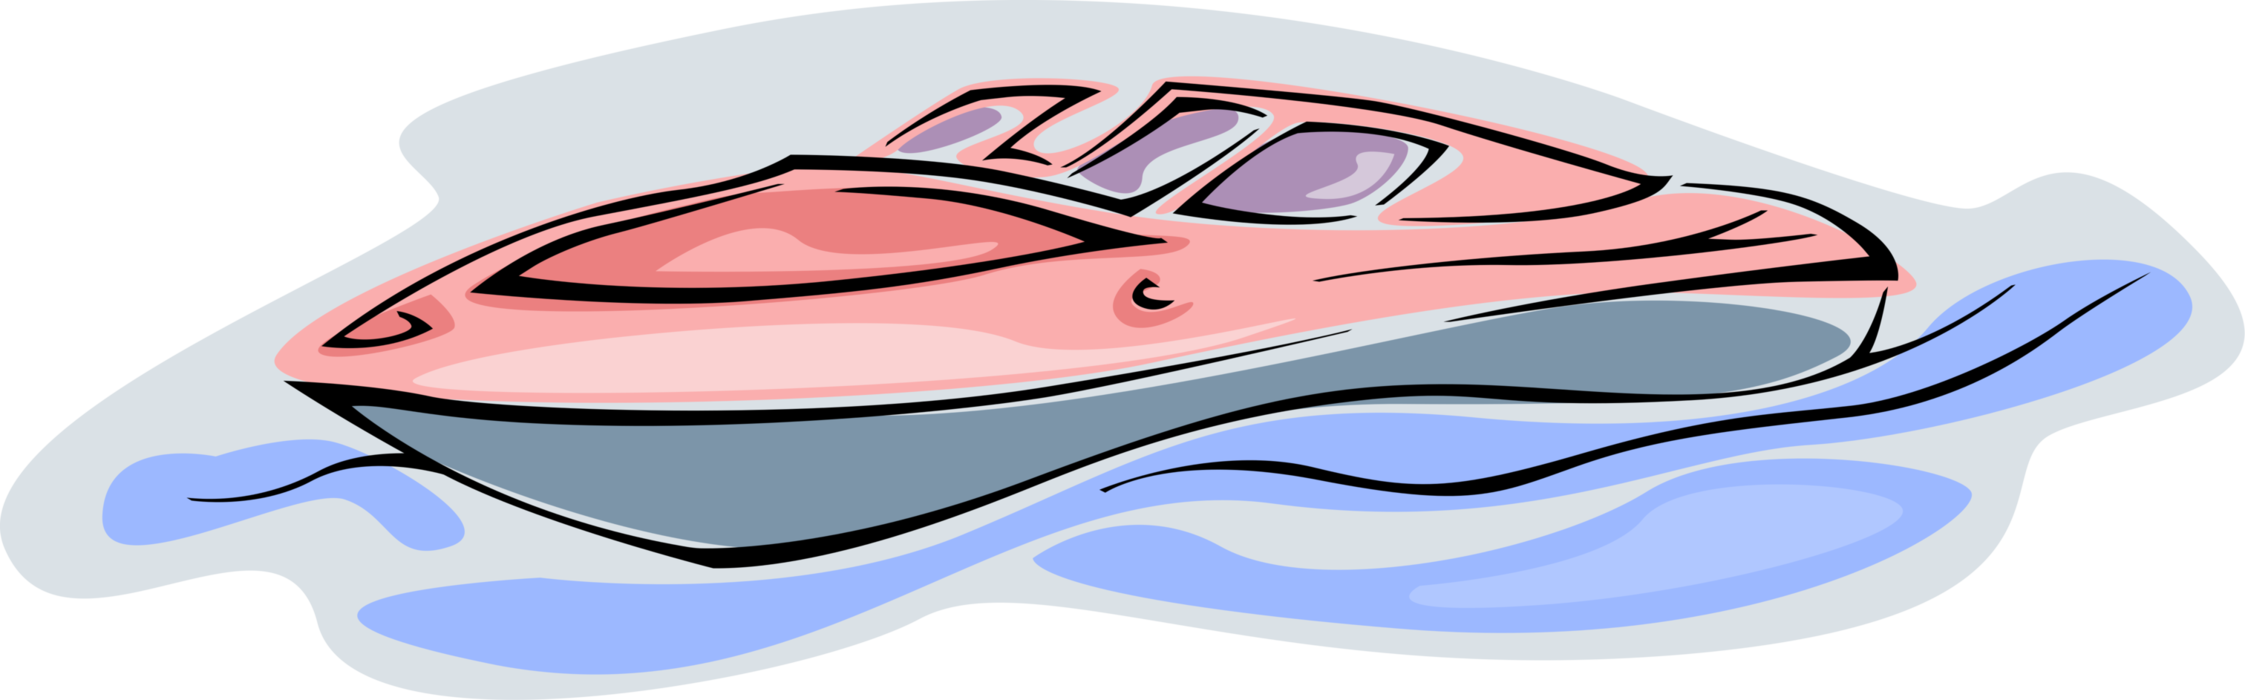 Vector Illustration of Speedboat Motorboat or Pleasure Craft Watercraft Boat